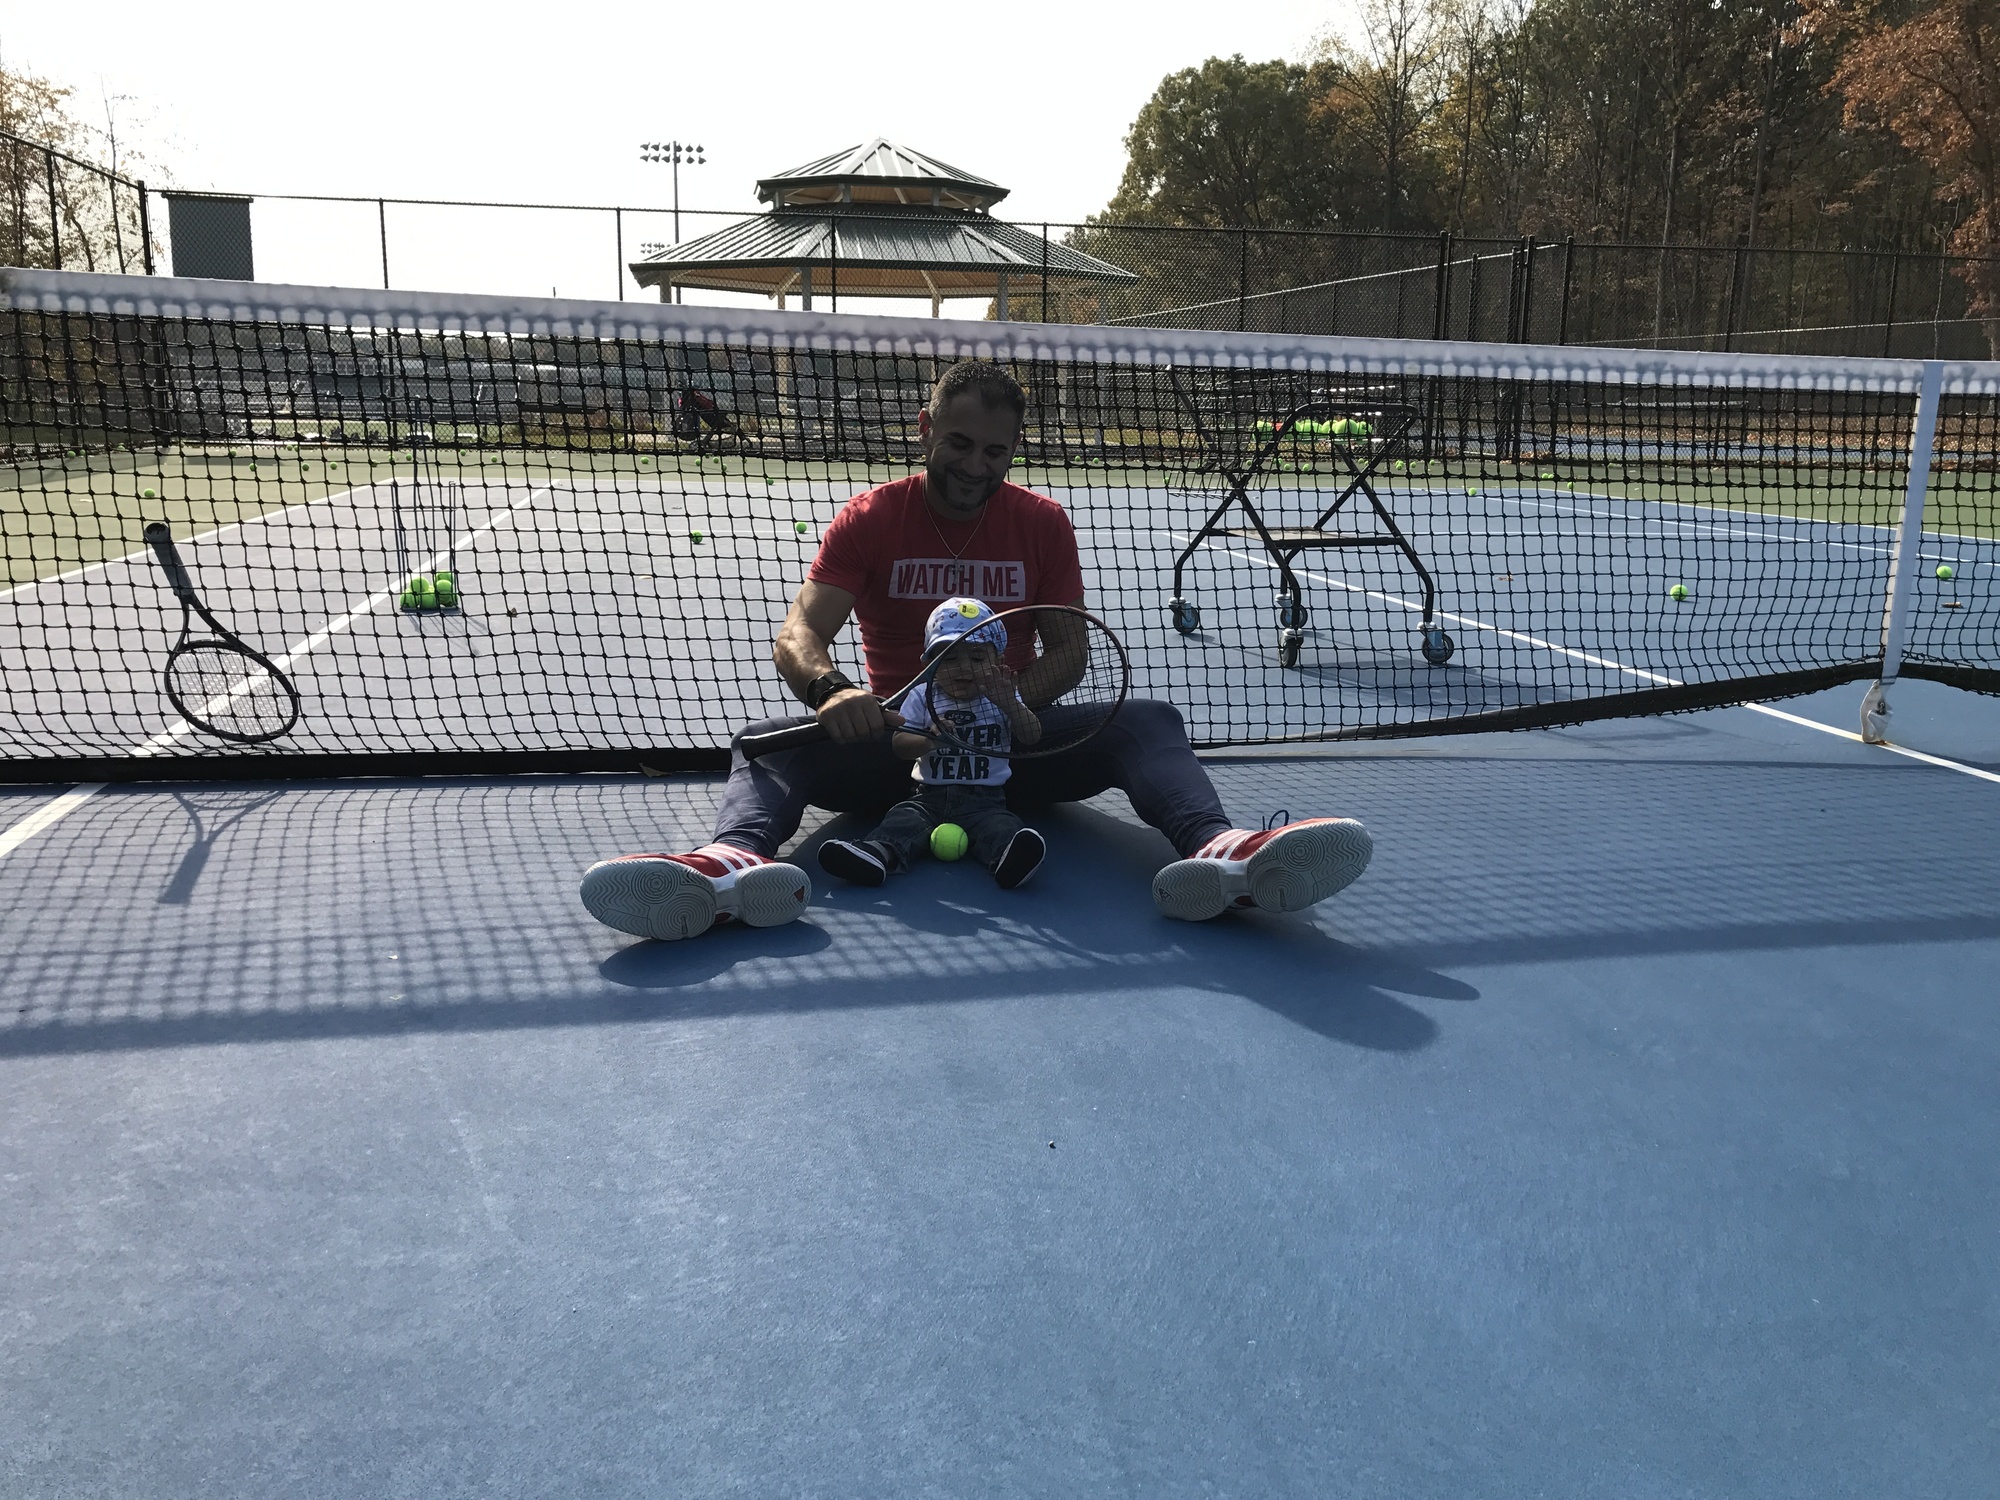 Peter O. teaches tennis lessons in Paramus, NJ